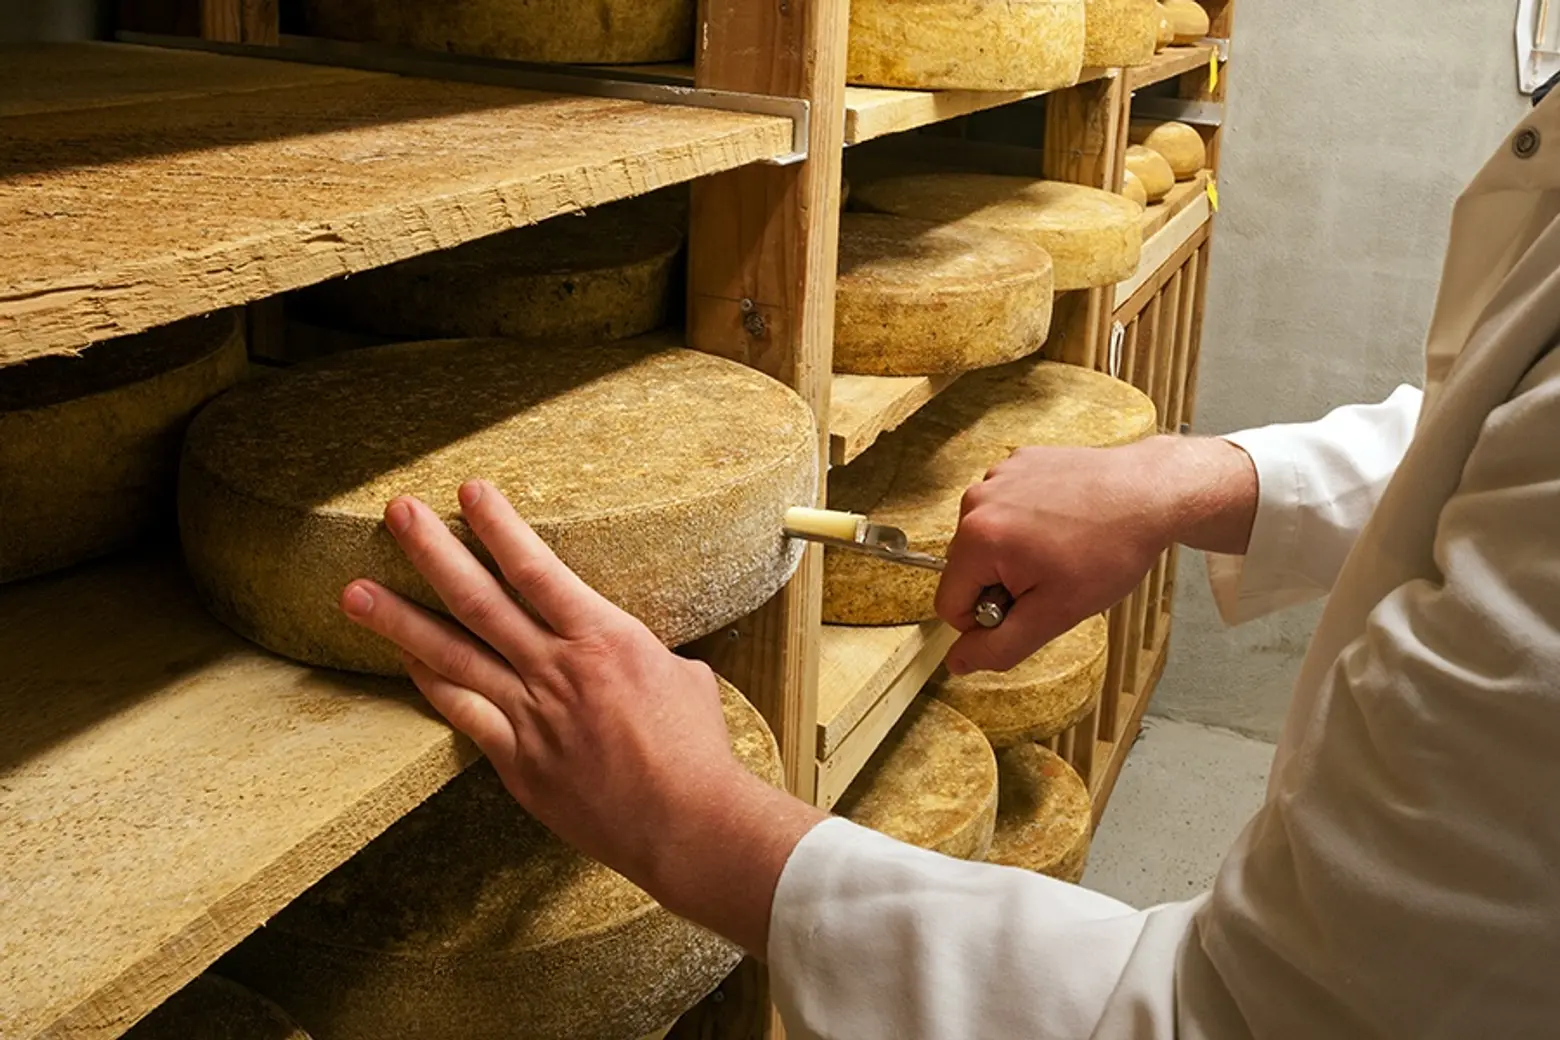 Murray's Parmigiano Reggiano Shredded Cheese, 1 ct - Ralphs